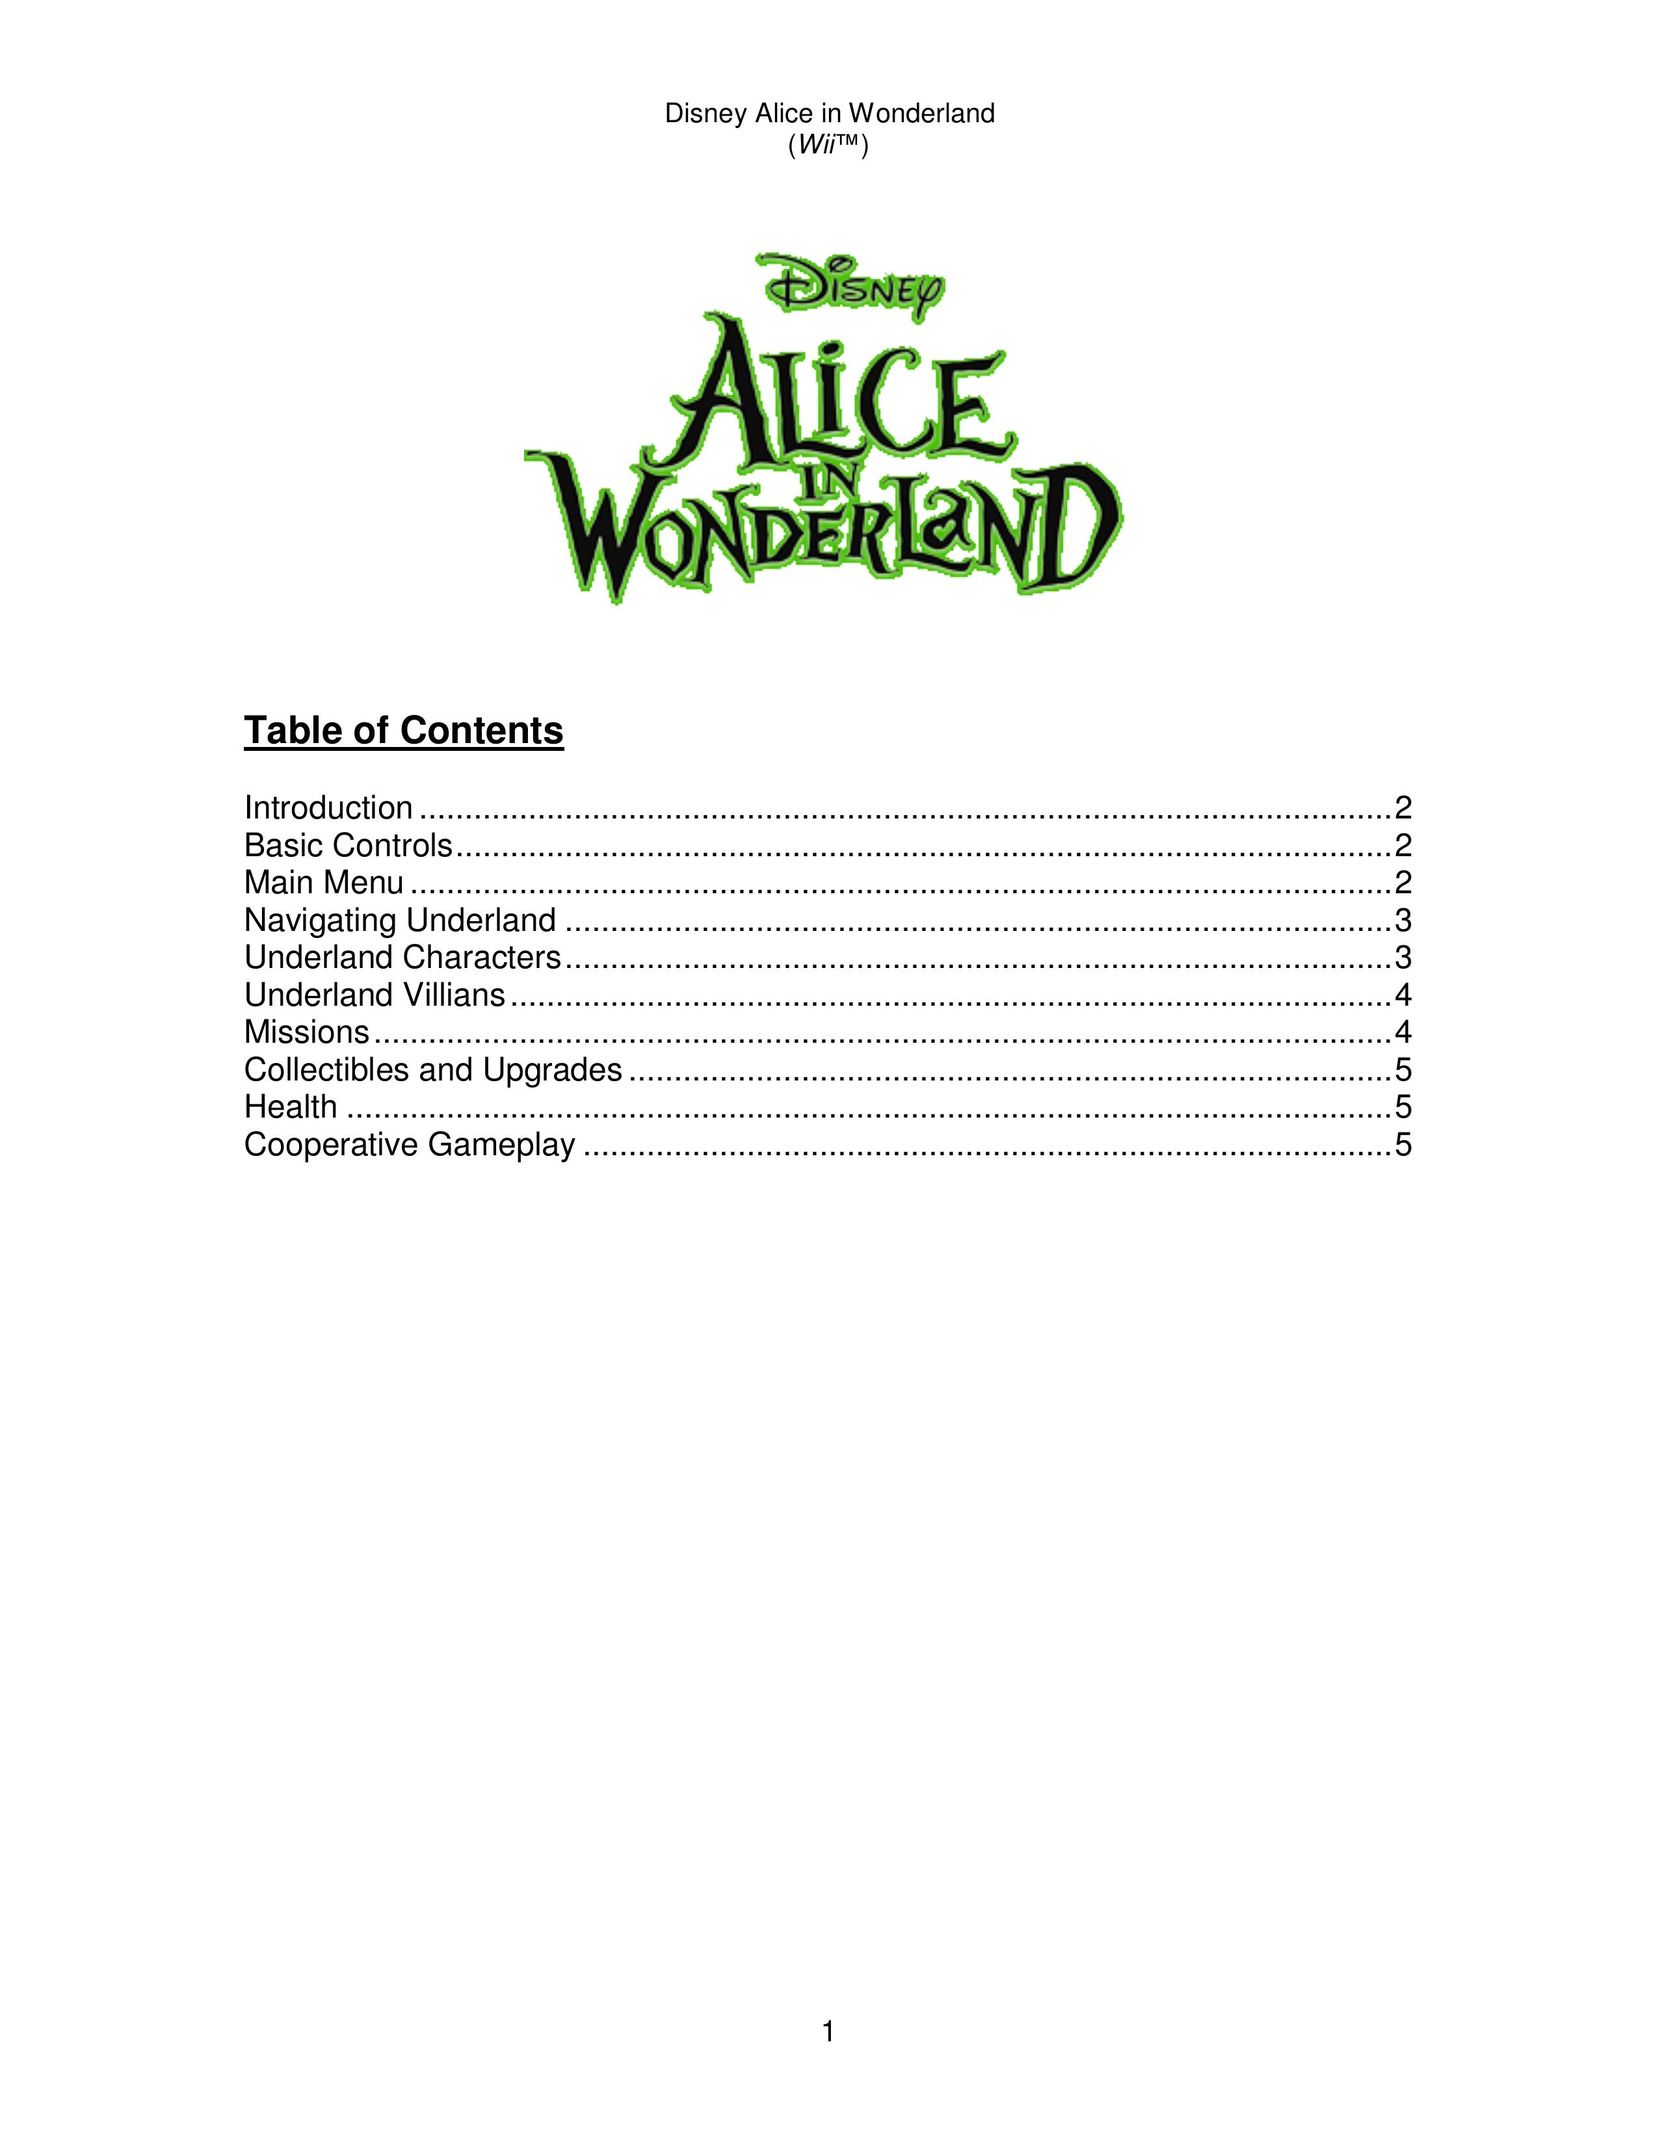 Disney Interactive Studios Alice in Wonderland for Wii Video Games User Manual